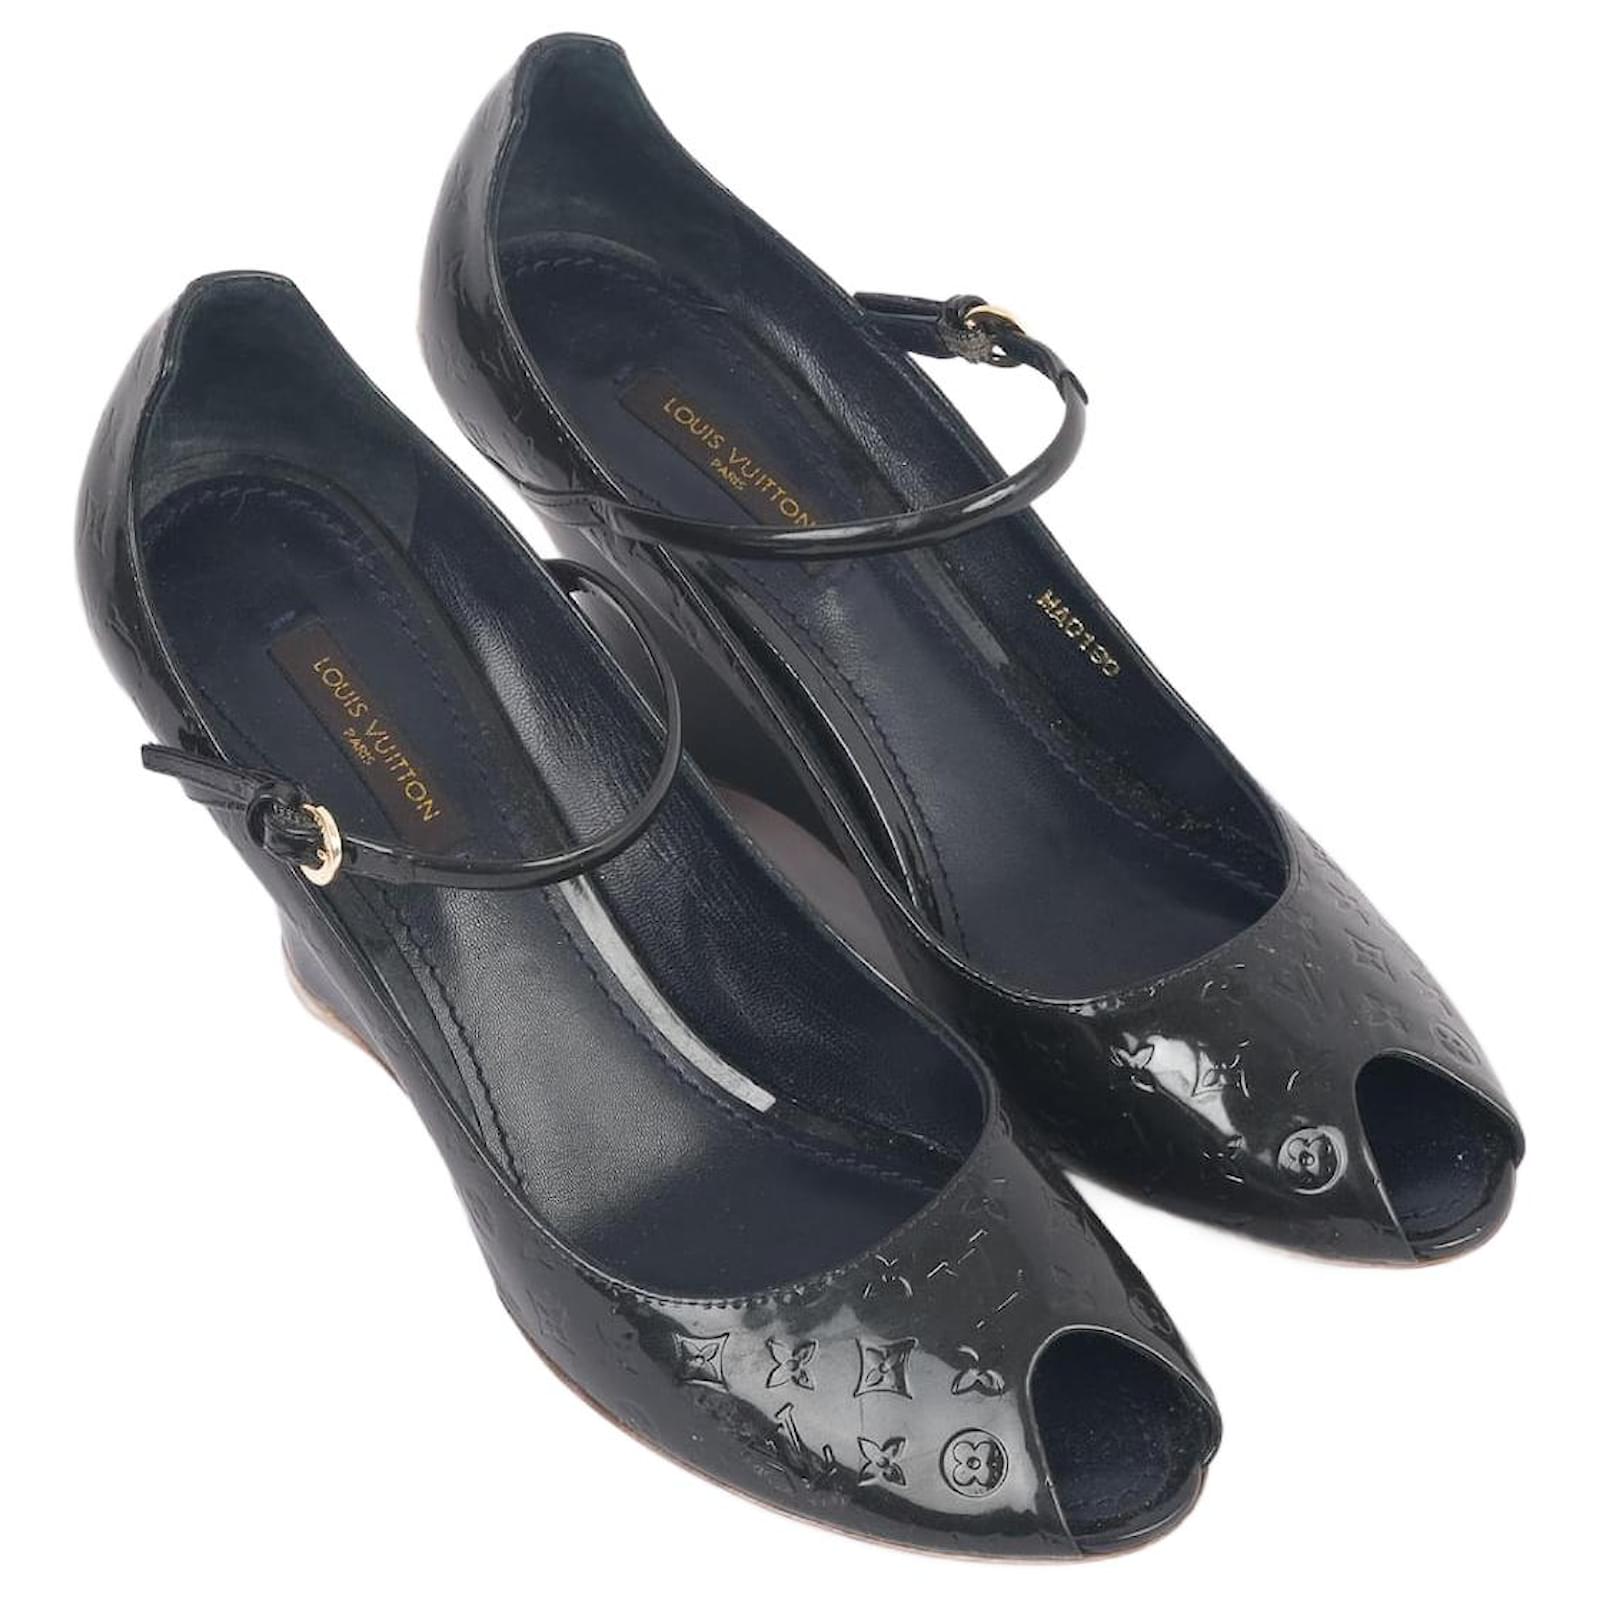 Vintage Elefanten black patent leather dress sandals